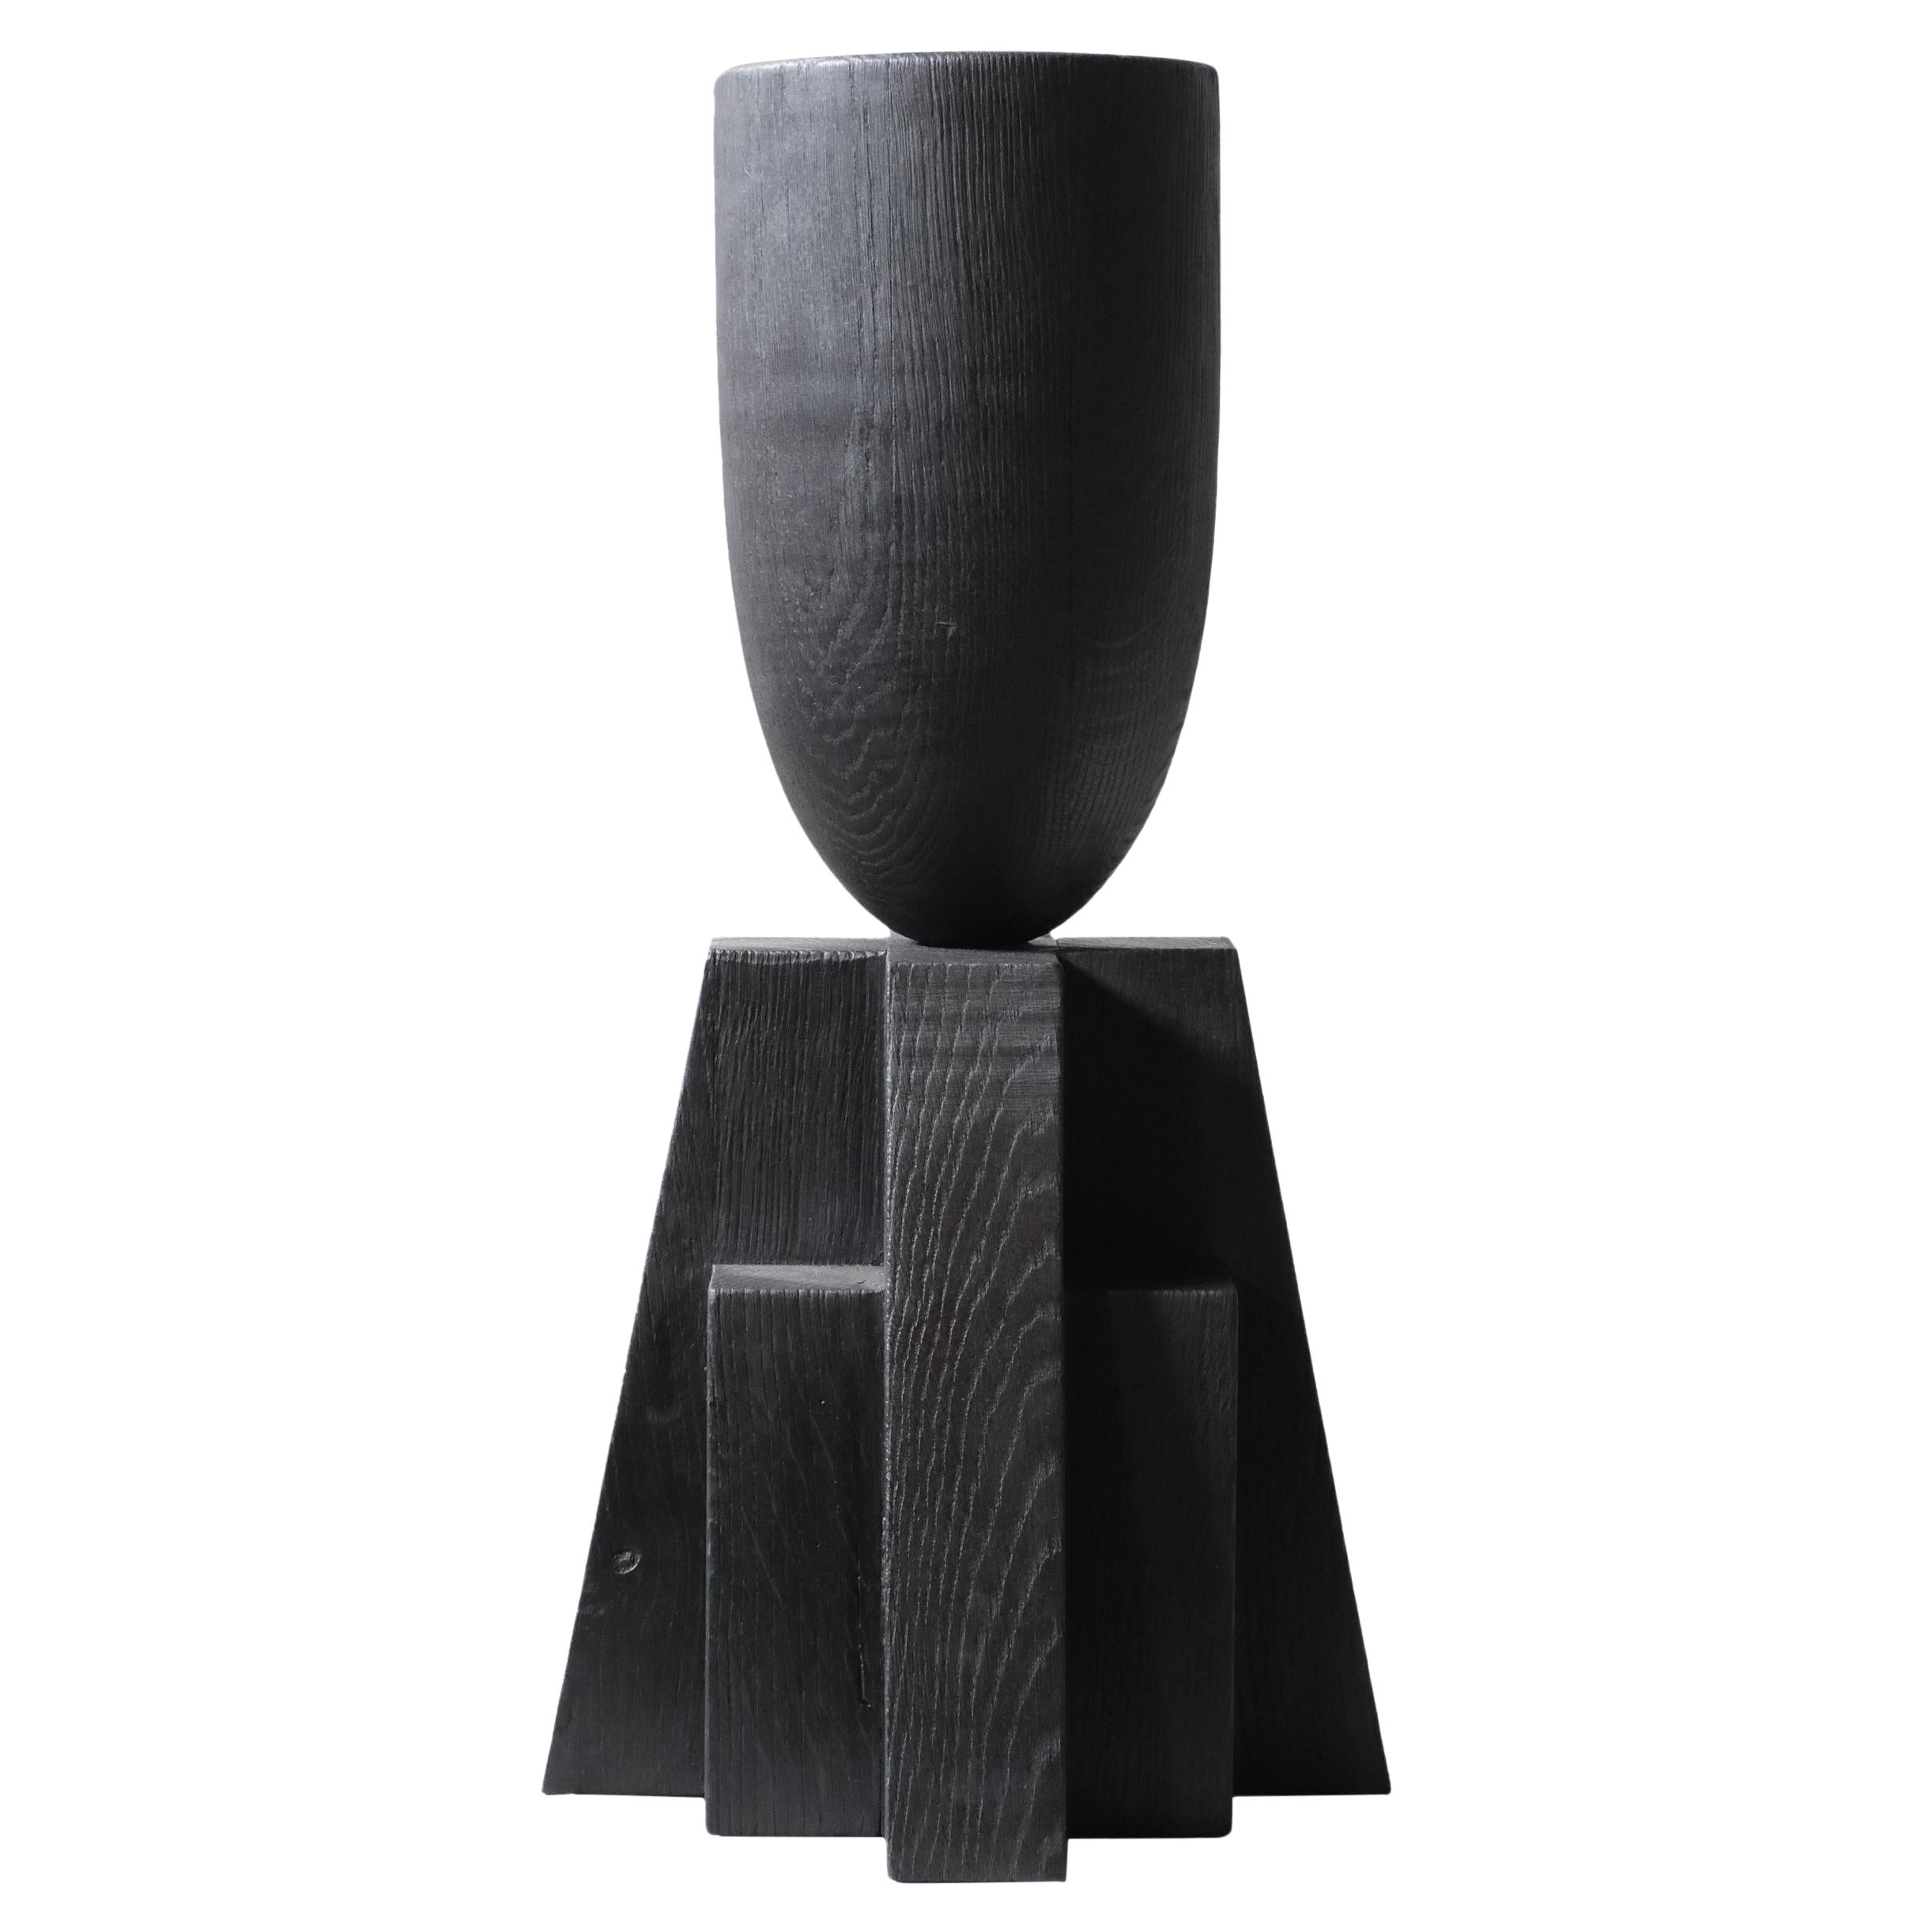 Babel Vase by Arno Declercq